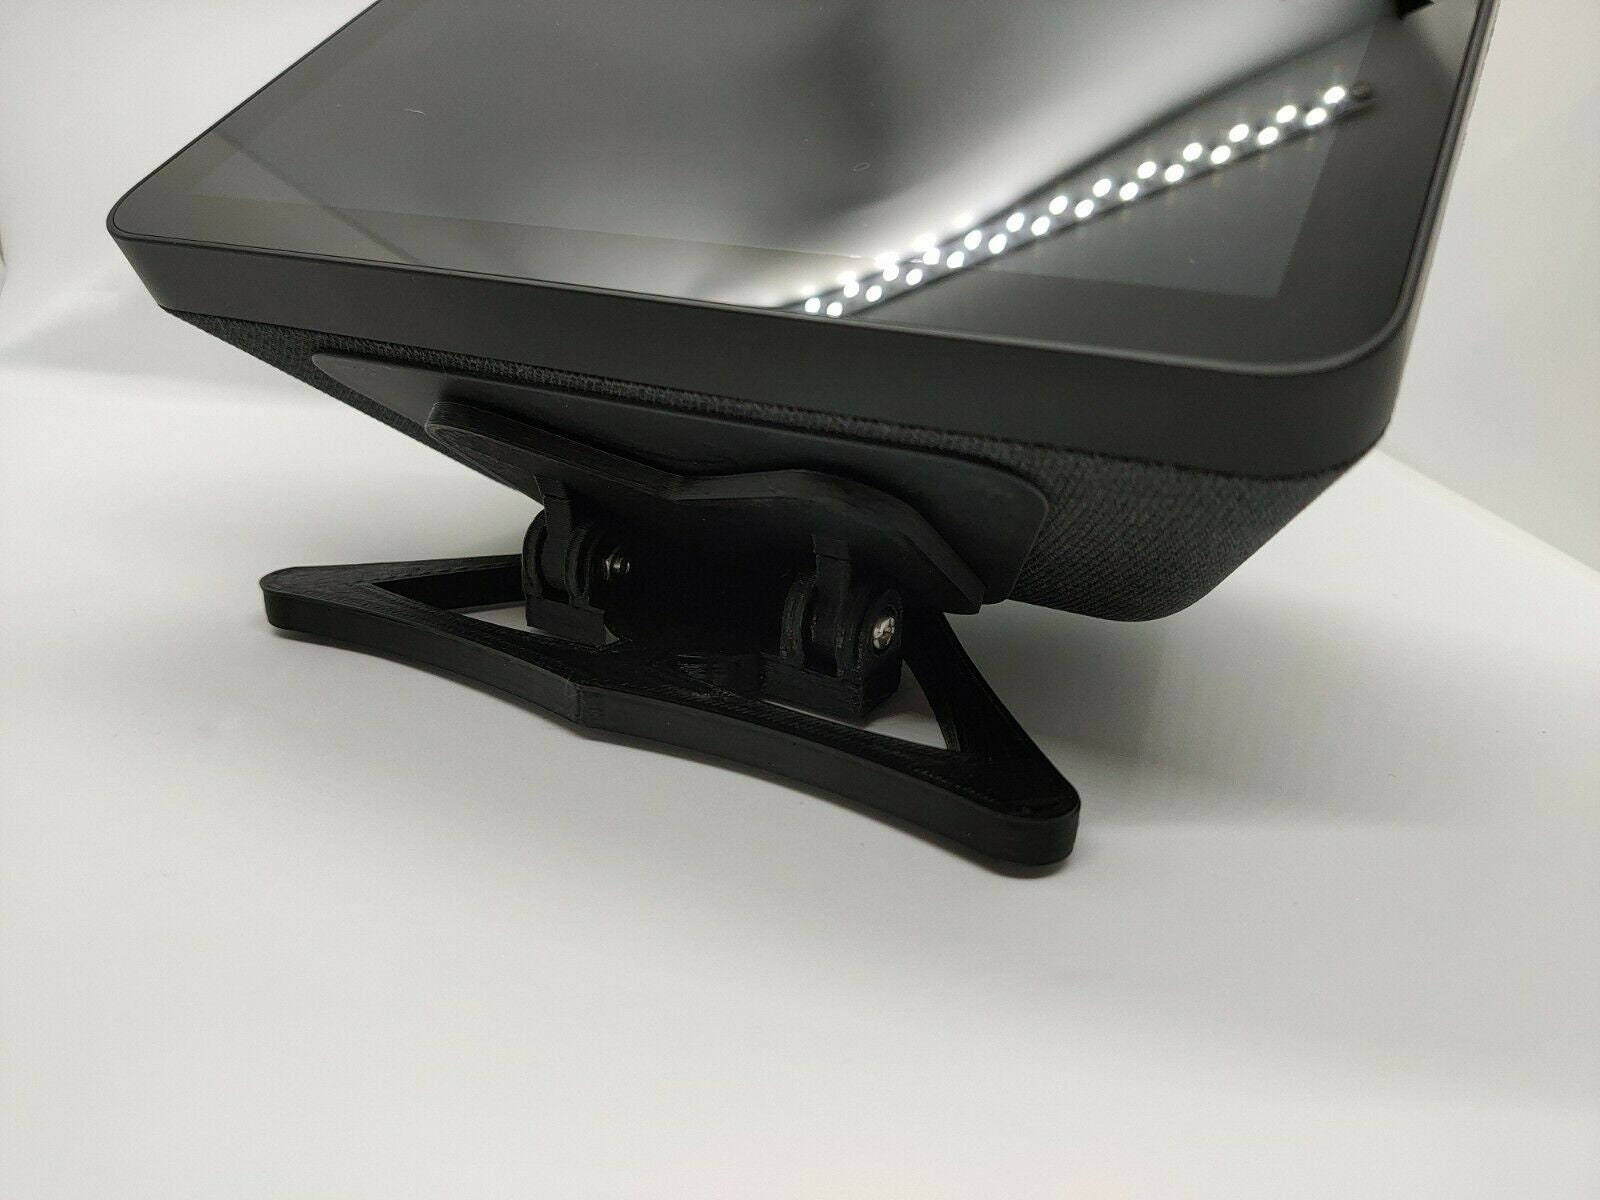 Adjustable Magnetic Stand Mount Accessory with Anti-Slip Base Swivel & Tilt Function EEEKit Stand Holder for Echo Show 8 Smart Speaker White 